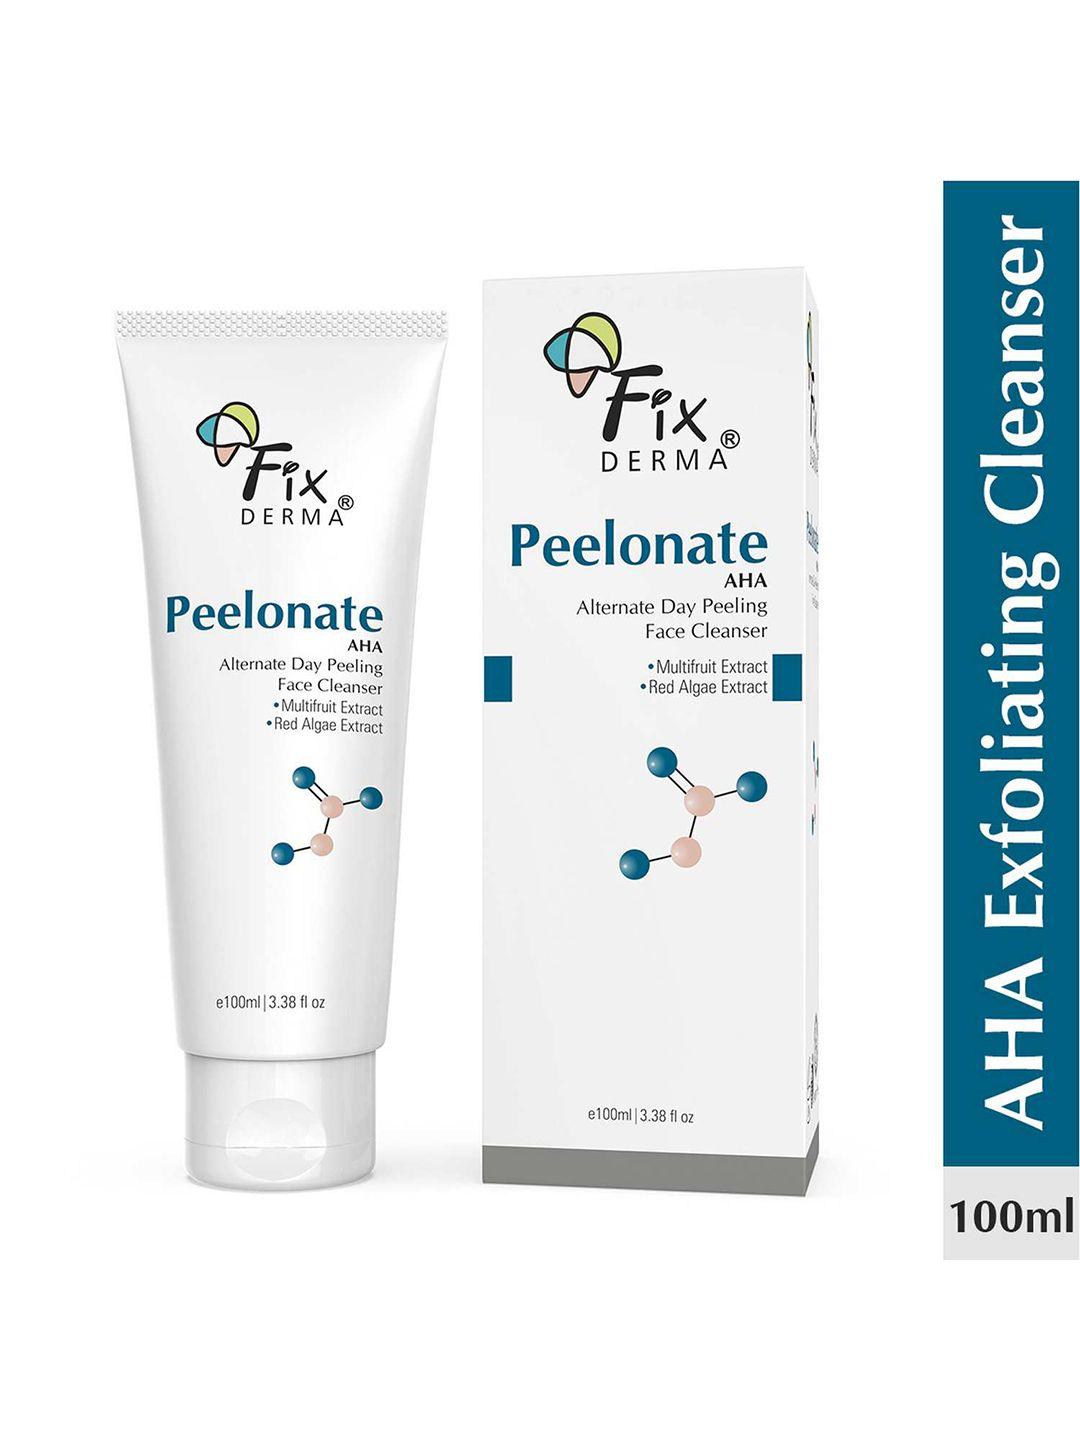 fixderma peelonate aha face cleanser & face exfoliator -100ml